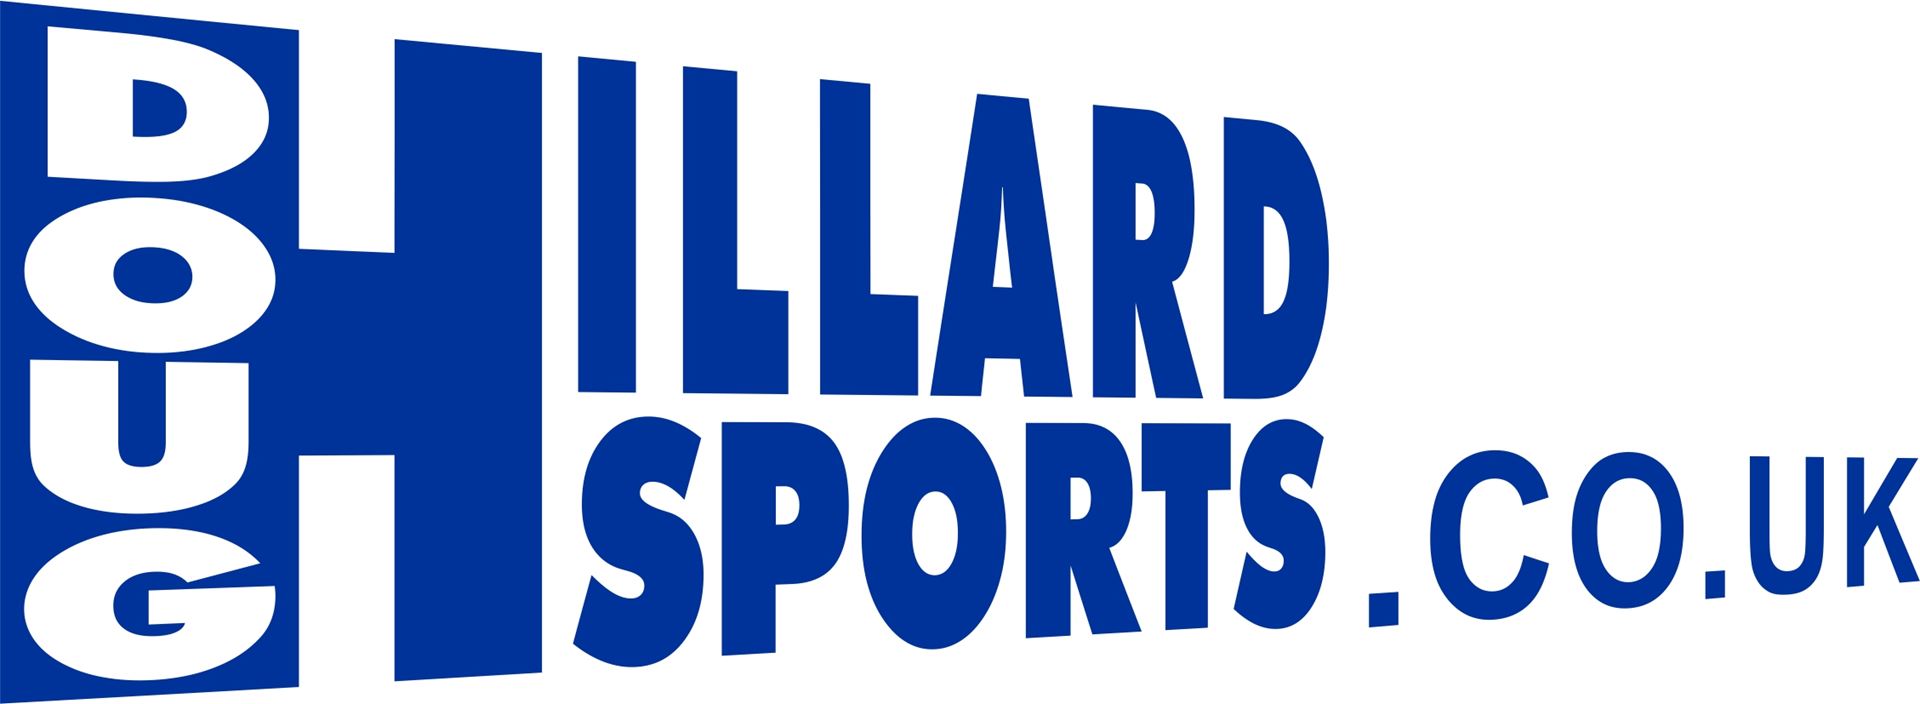 Doug Hillard Sports